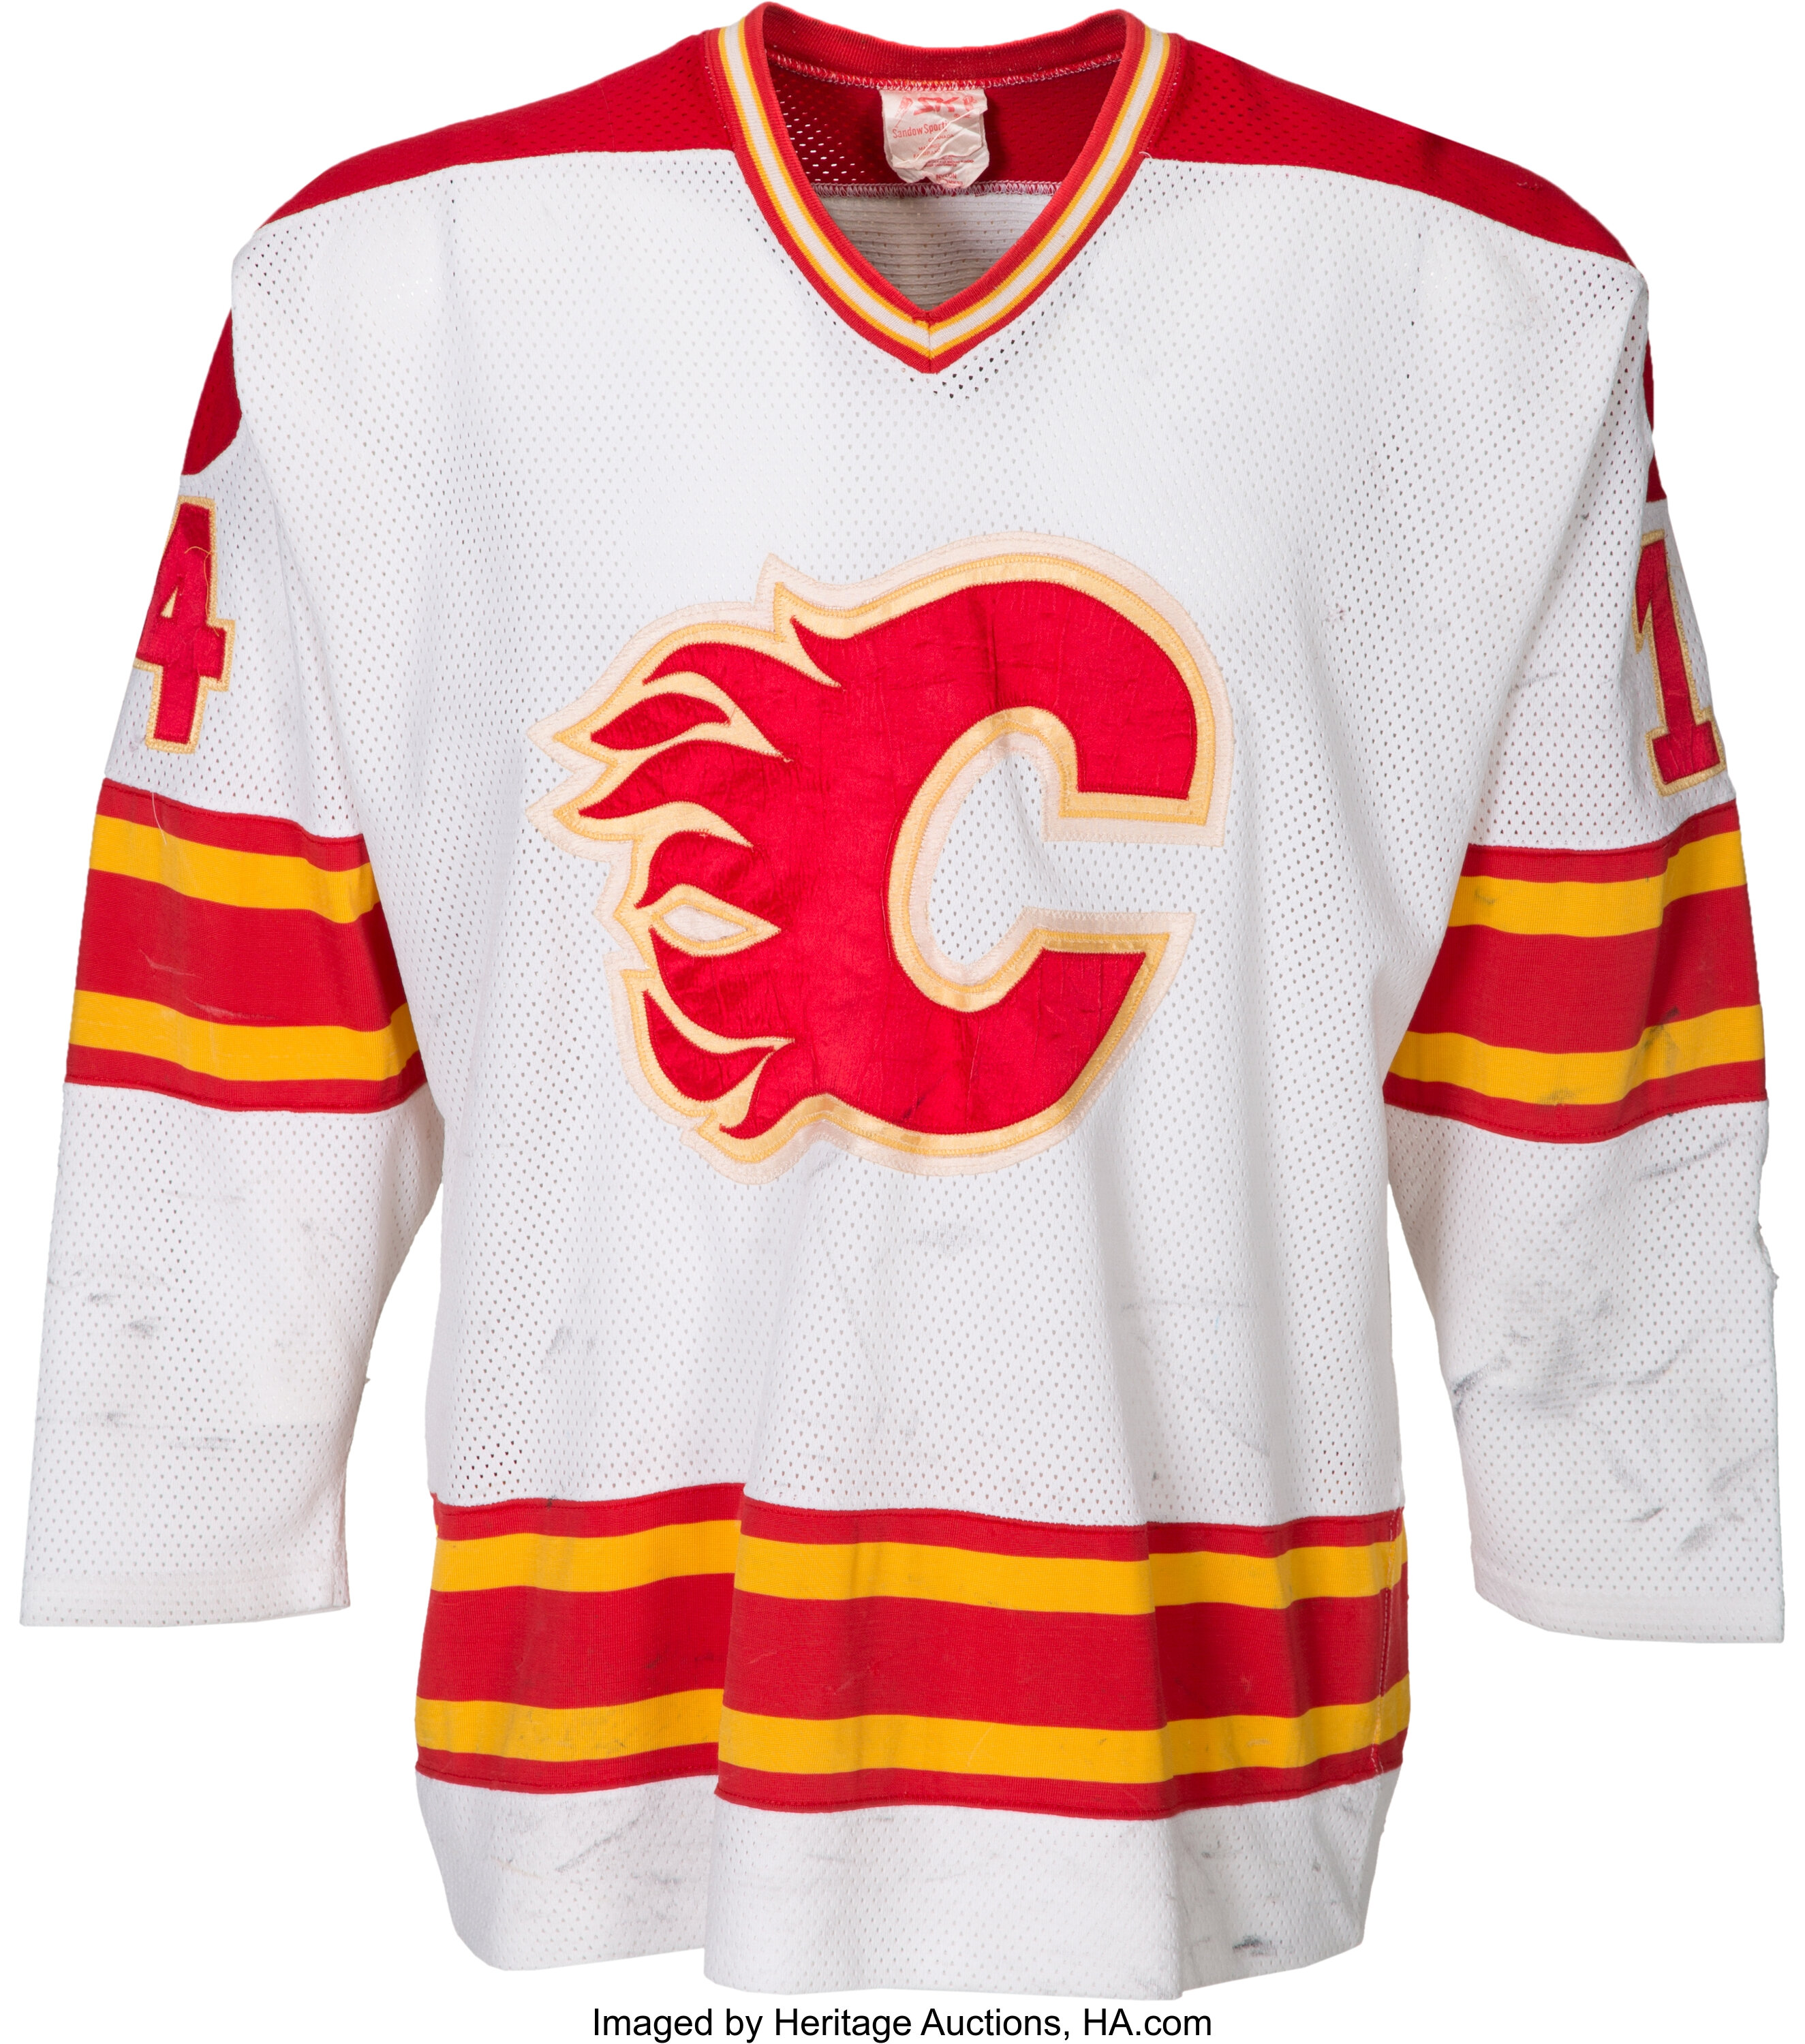 Flames prepare for season debut of vintage jersey —